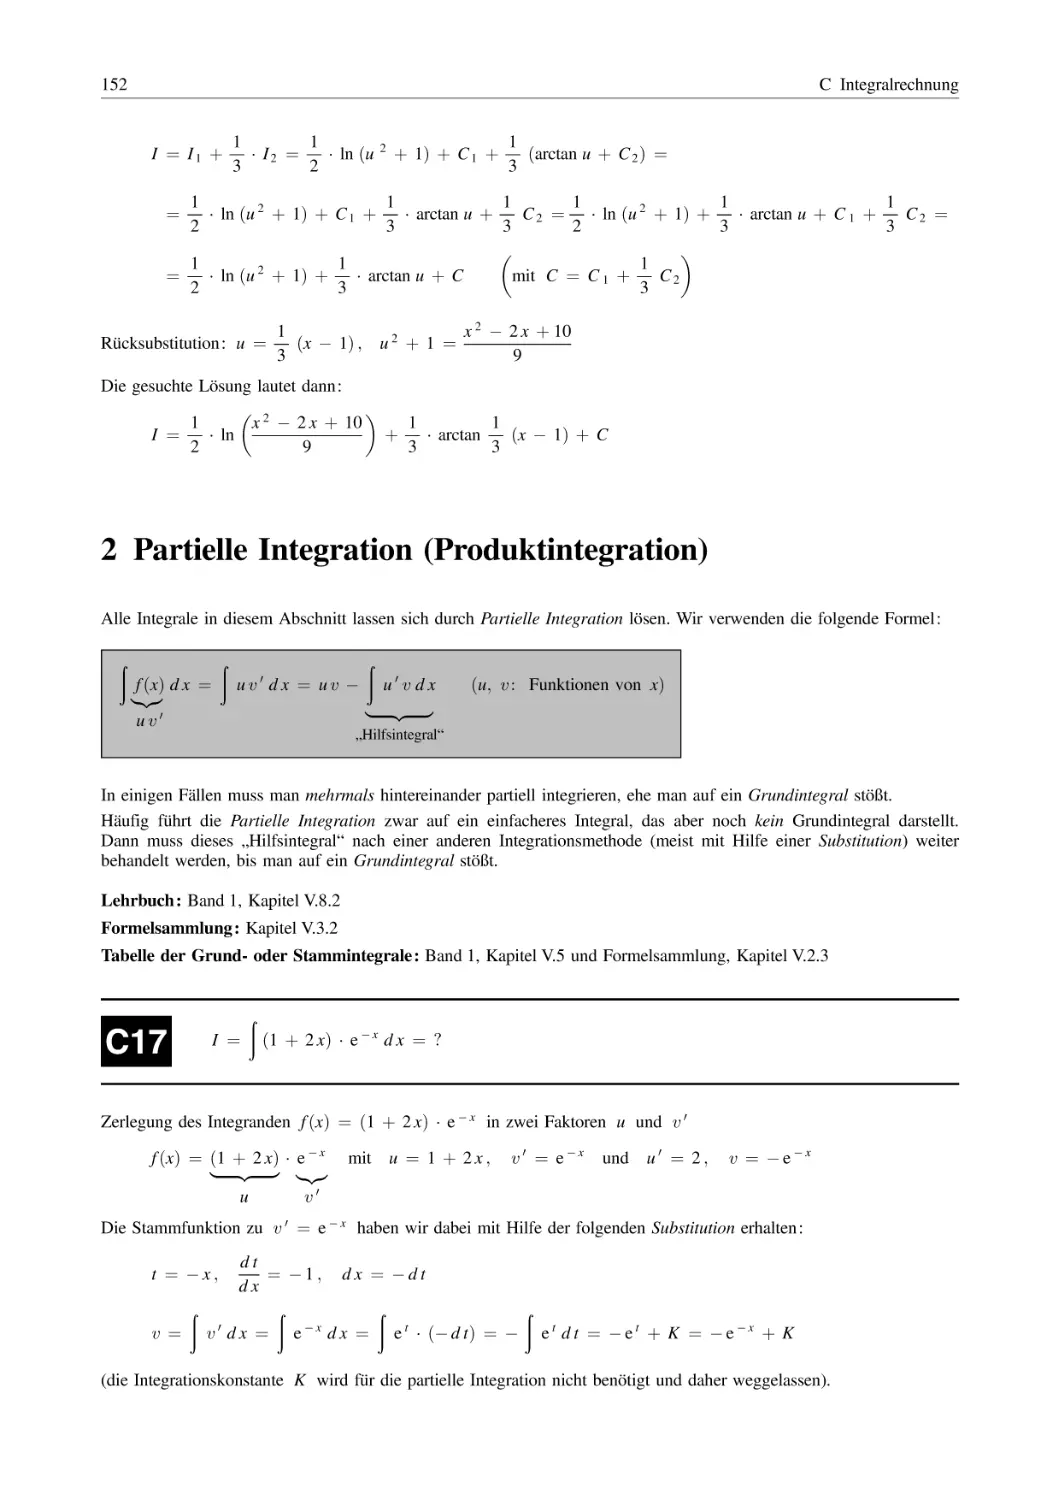 2 Partielle Integration (Produktintegration)